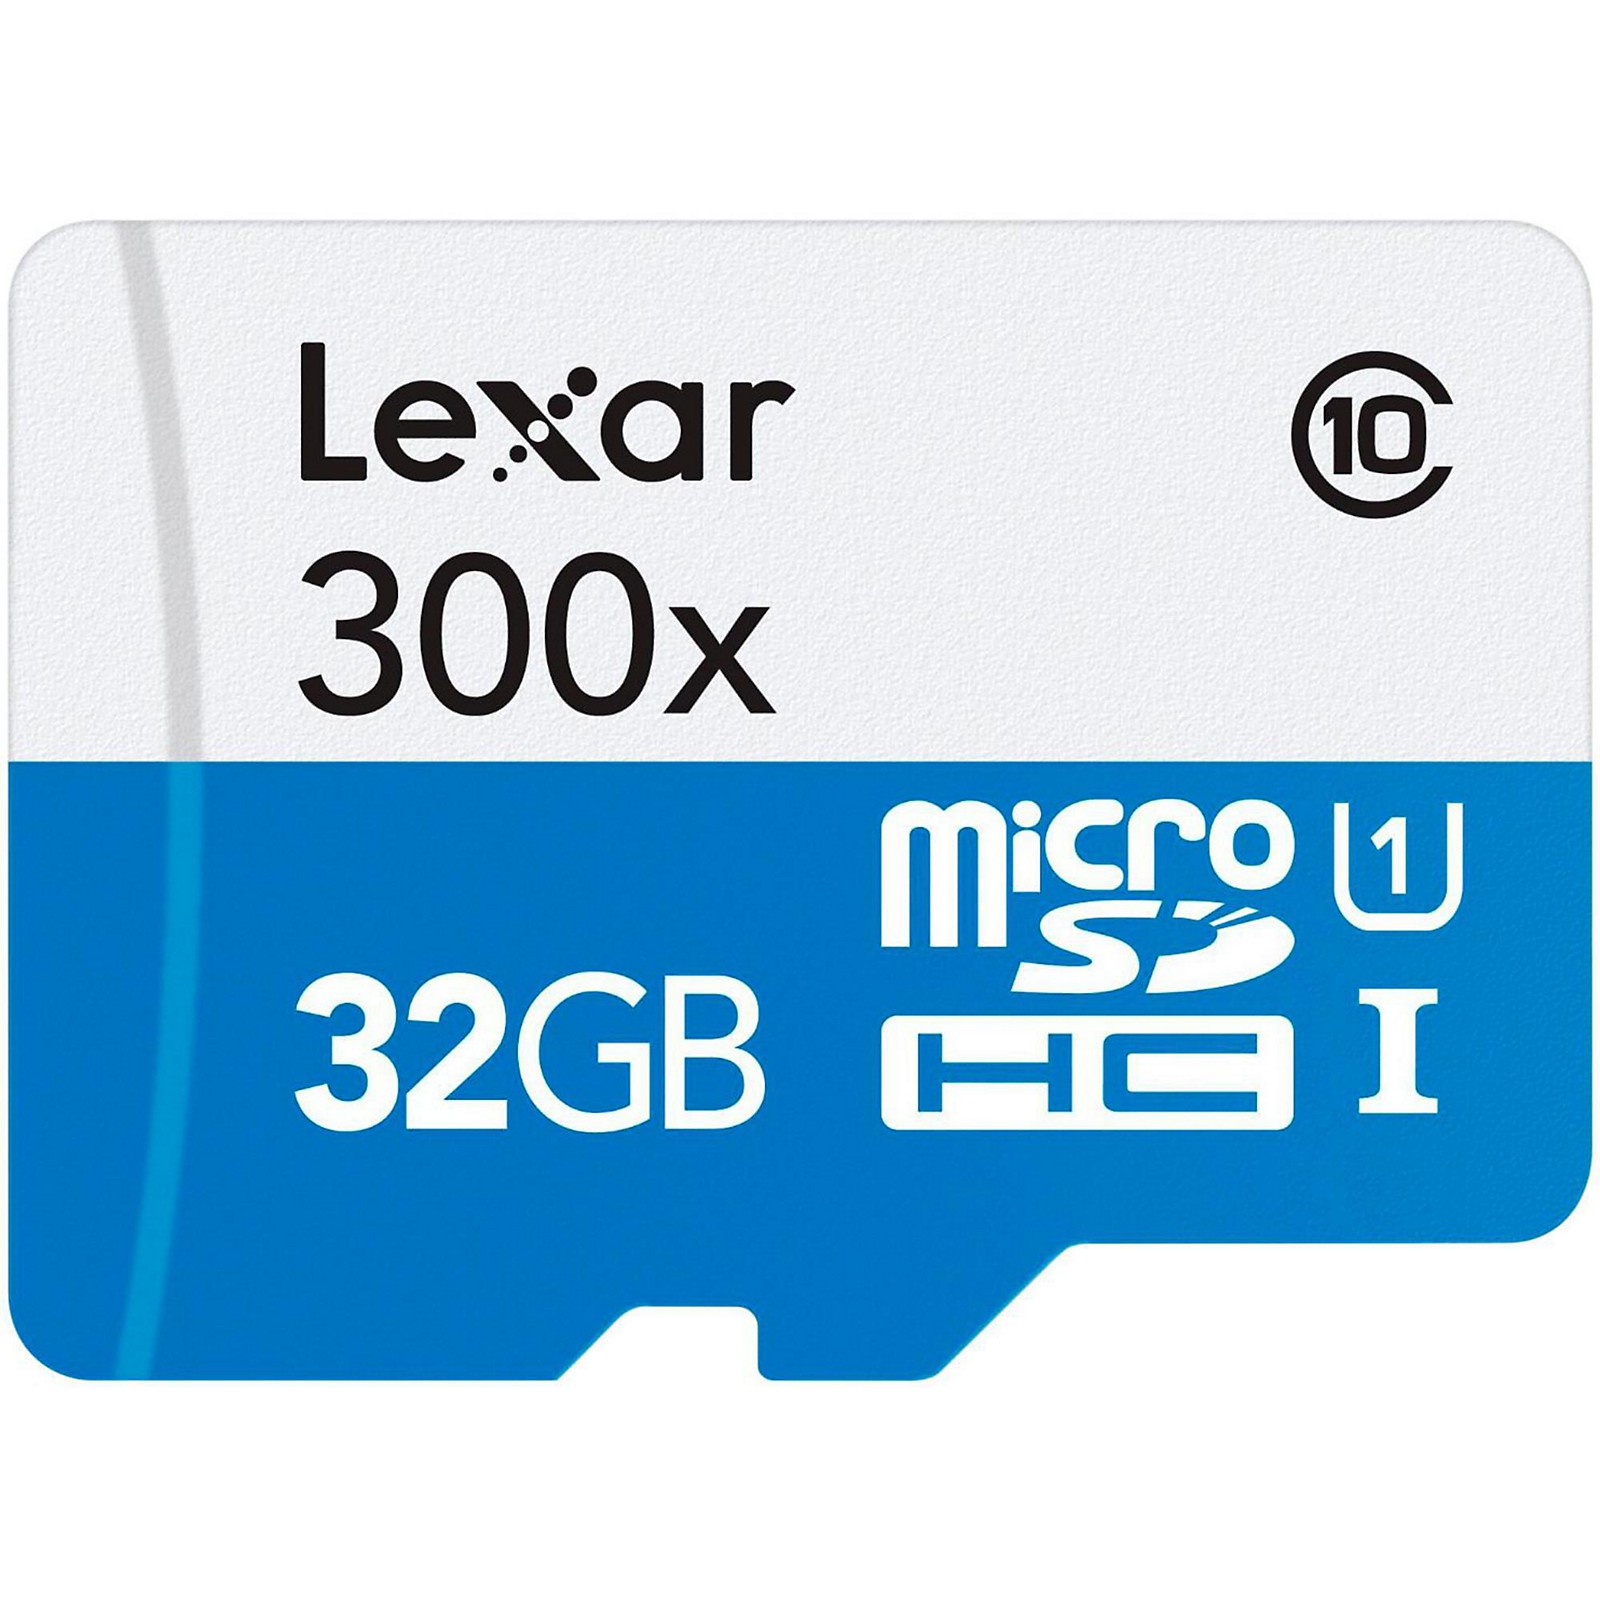 DK00150096 GOPRO MEMORY CARD LEXAR MicroSD 600x 32GB 